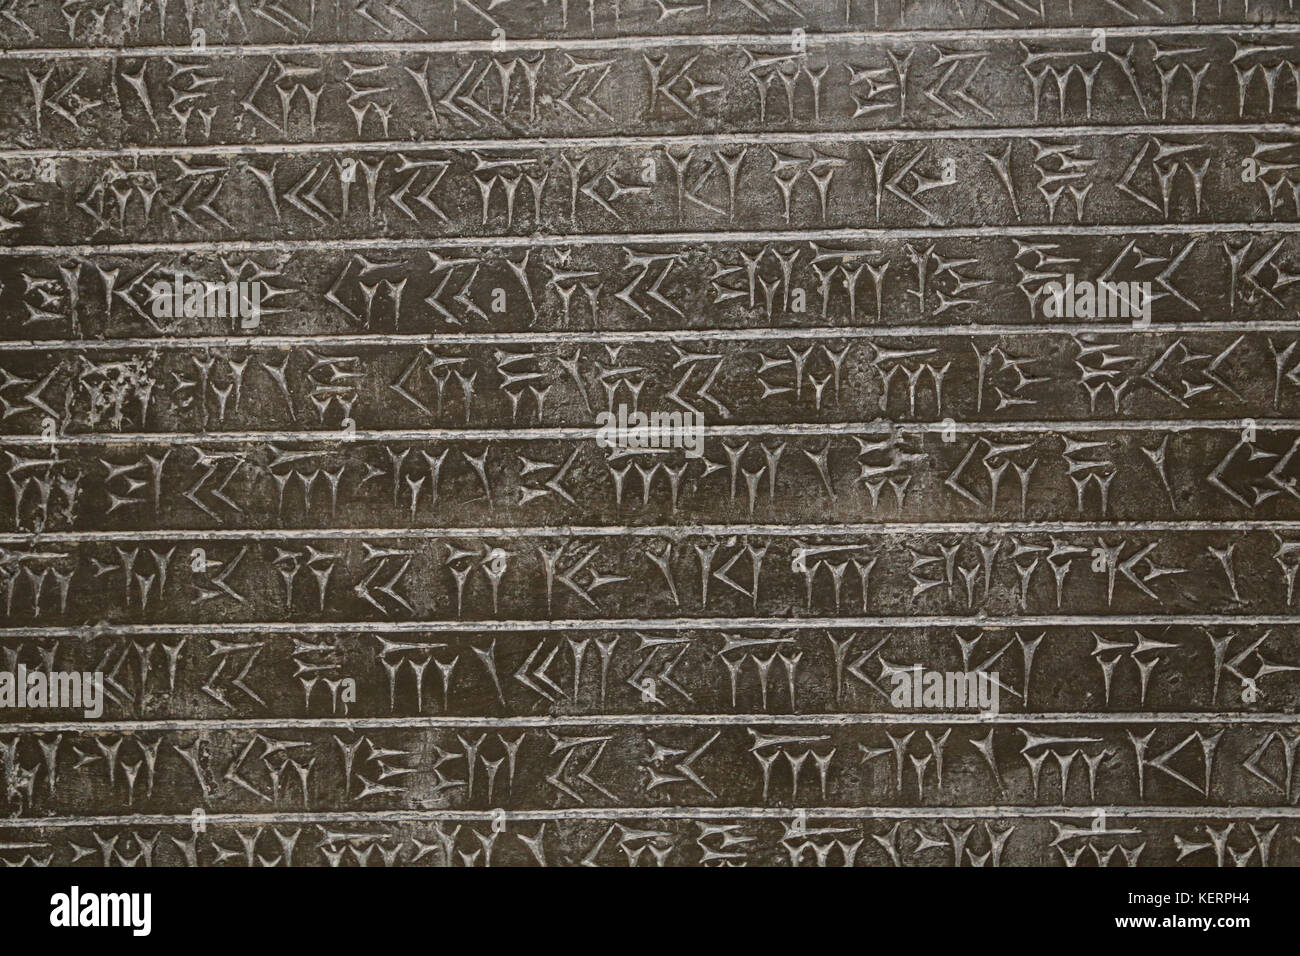 Old Persian inscription. Cuneiform script. Palace of Darius, Persepolis, Iran. 4th century. British Museum. London. GBR. Stock Photo